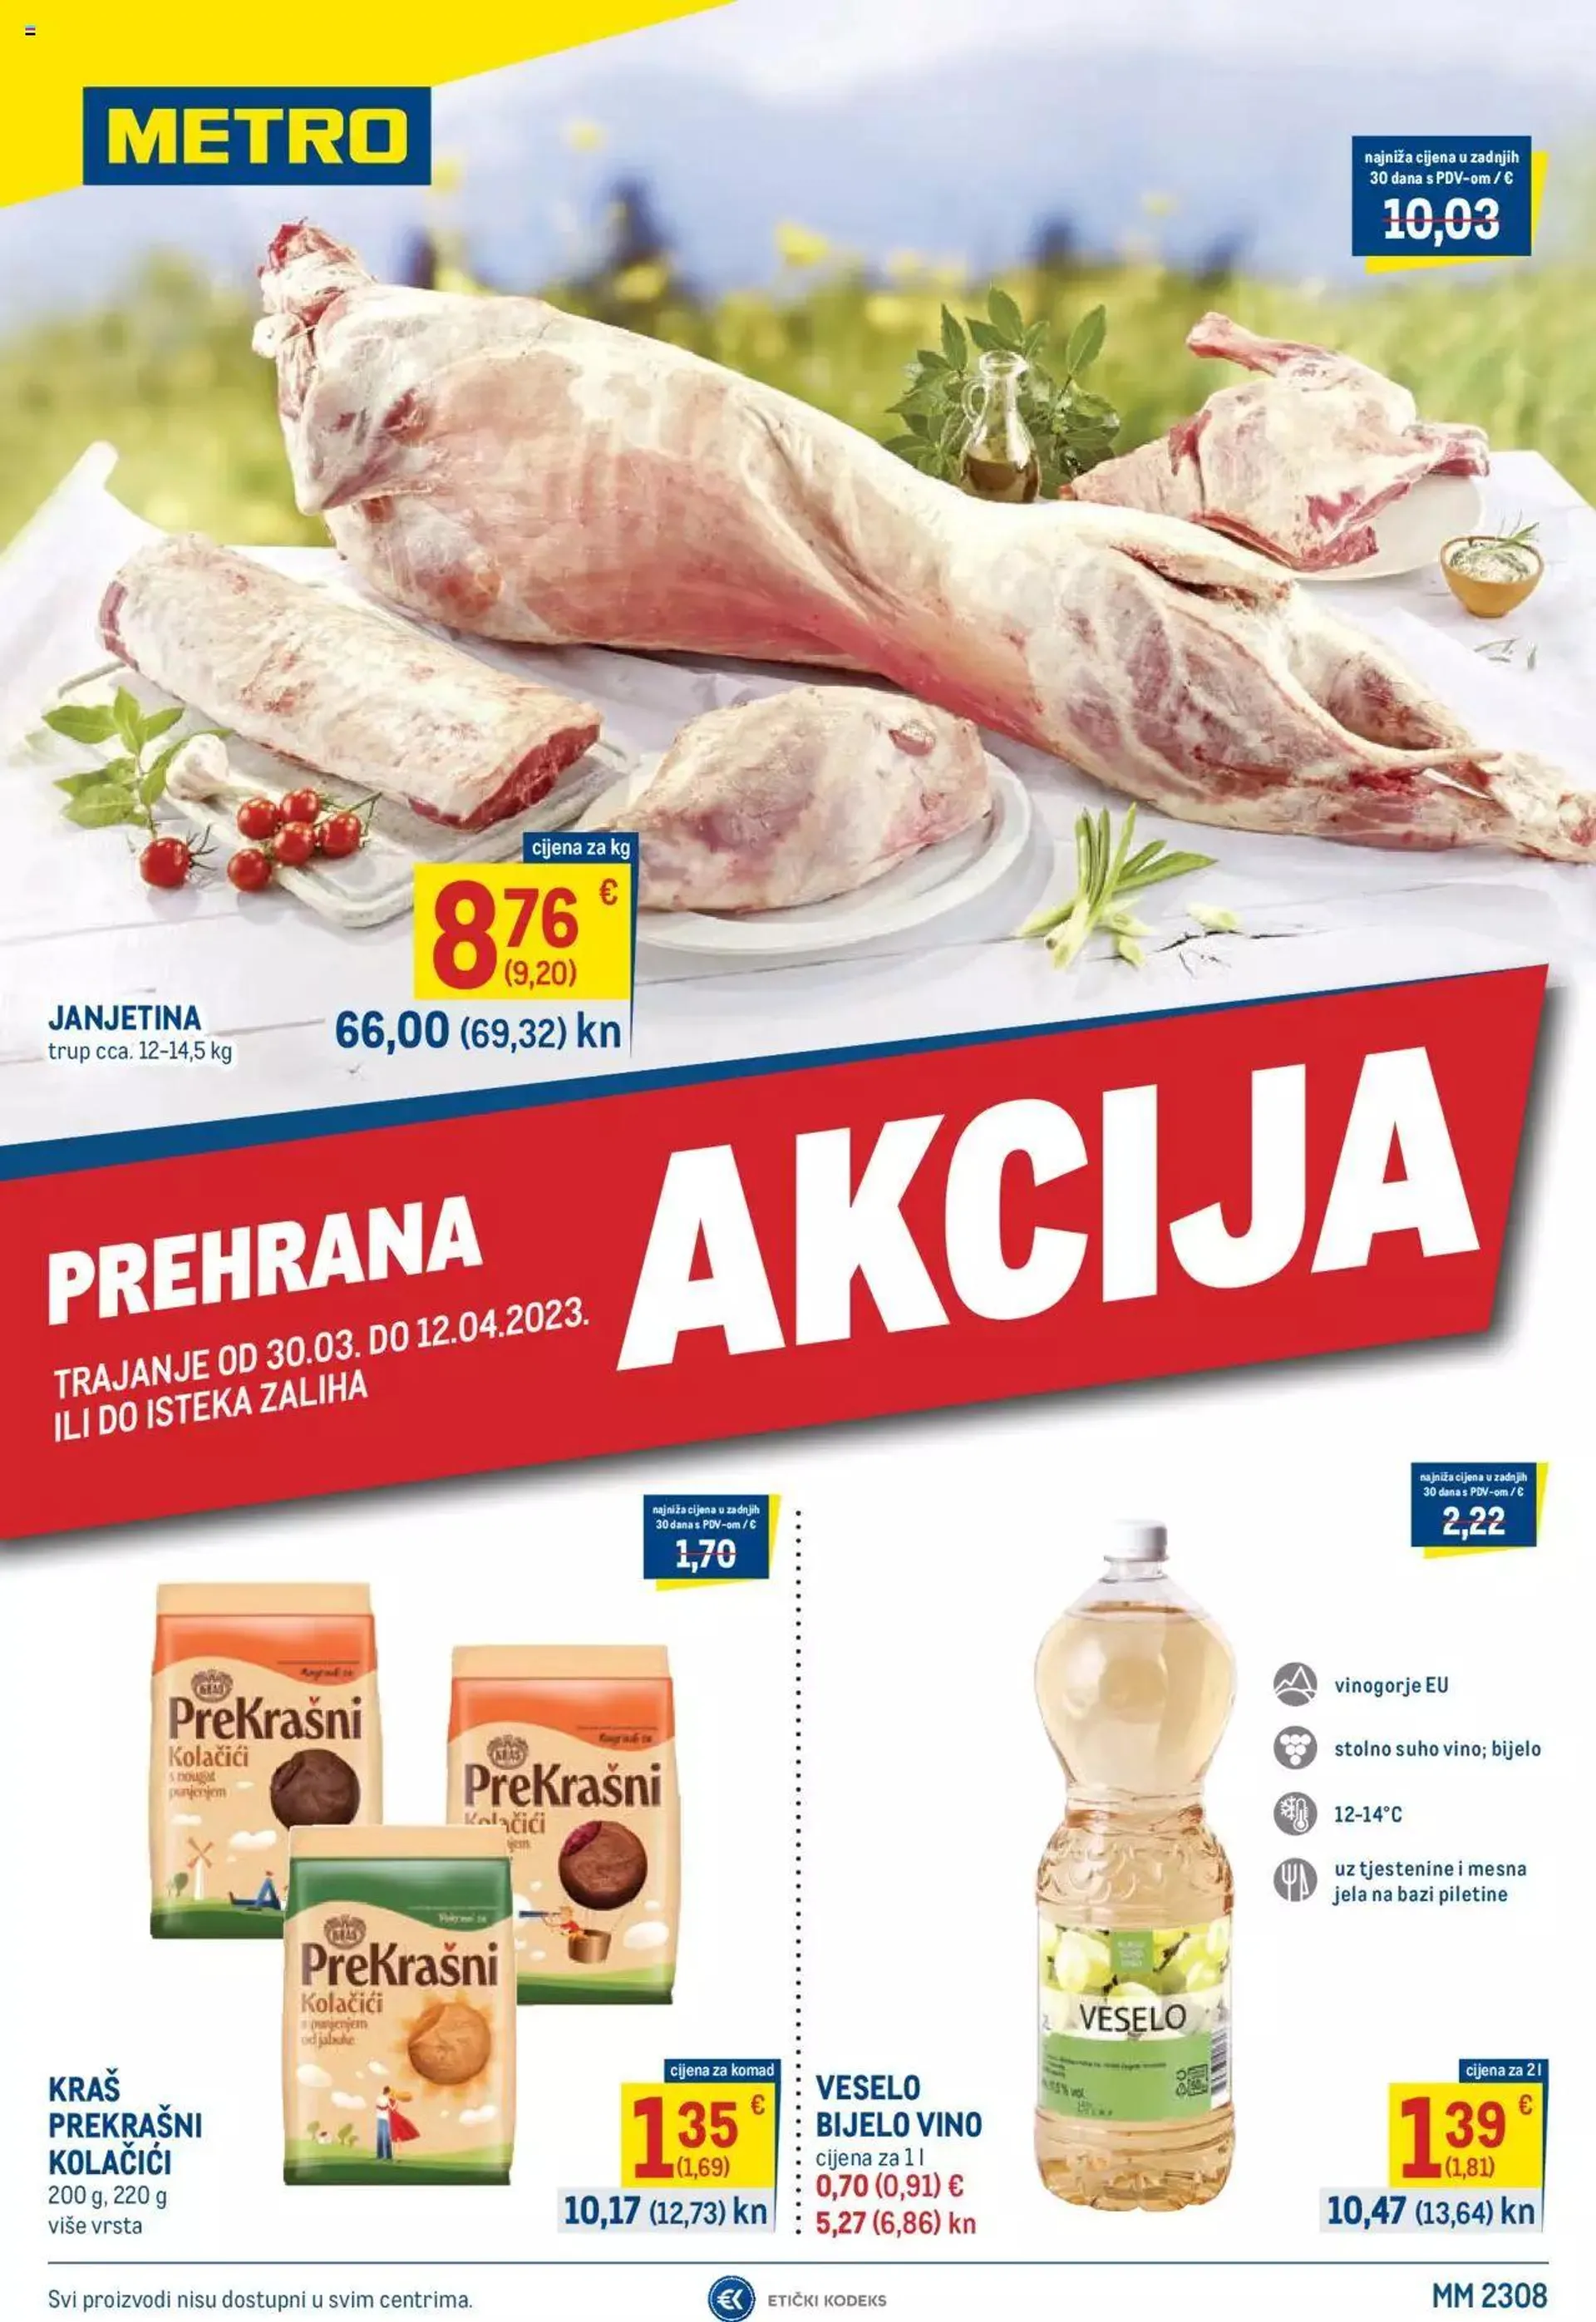 Metro - Metro Croatia - Prehrana - 0